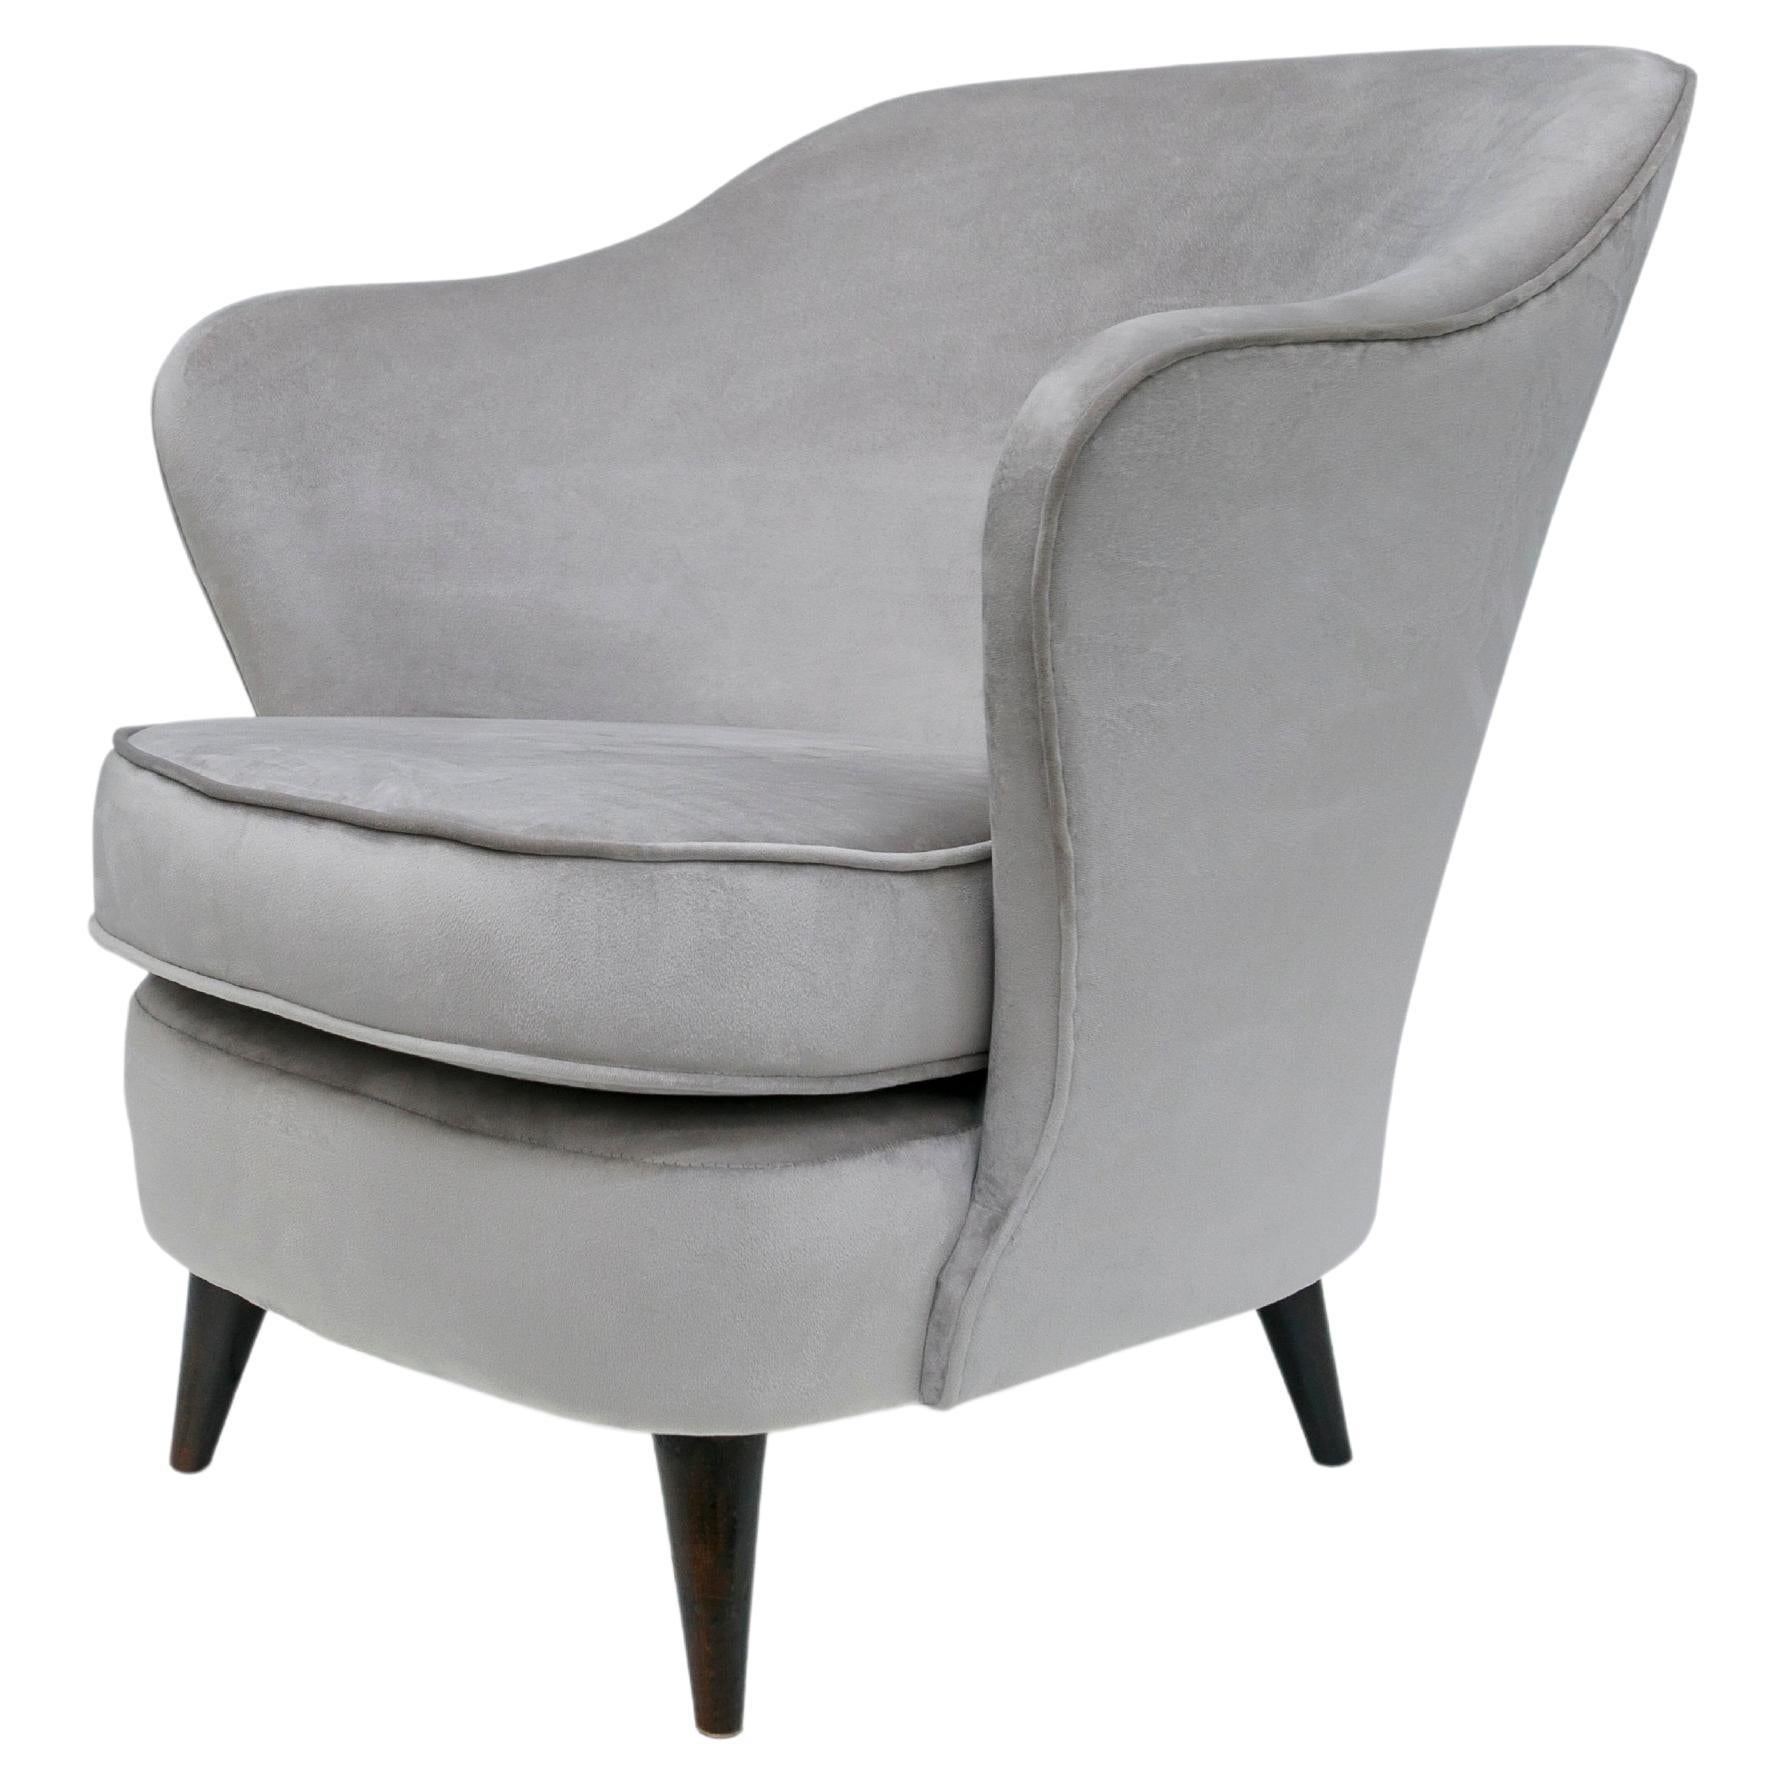 Schlanker Sessel aus grauem Stoff, zugeschrieben  Joaquim Tenreiro, ca. 1950er Jahre